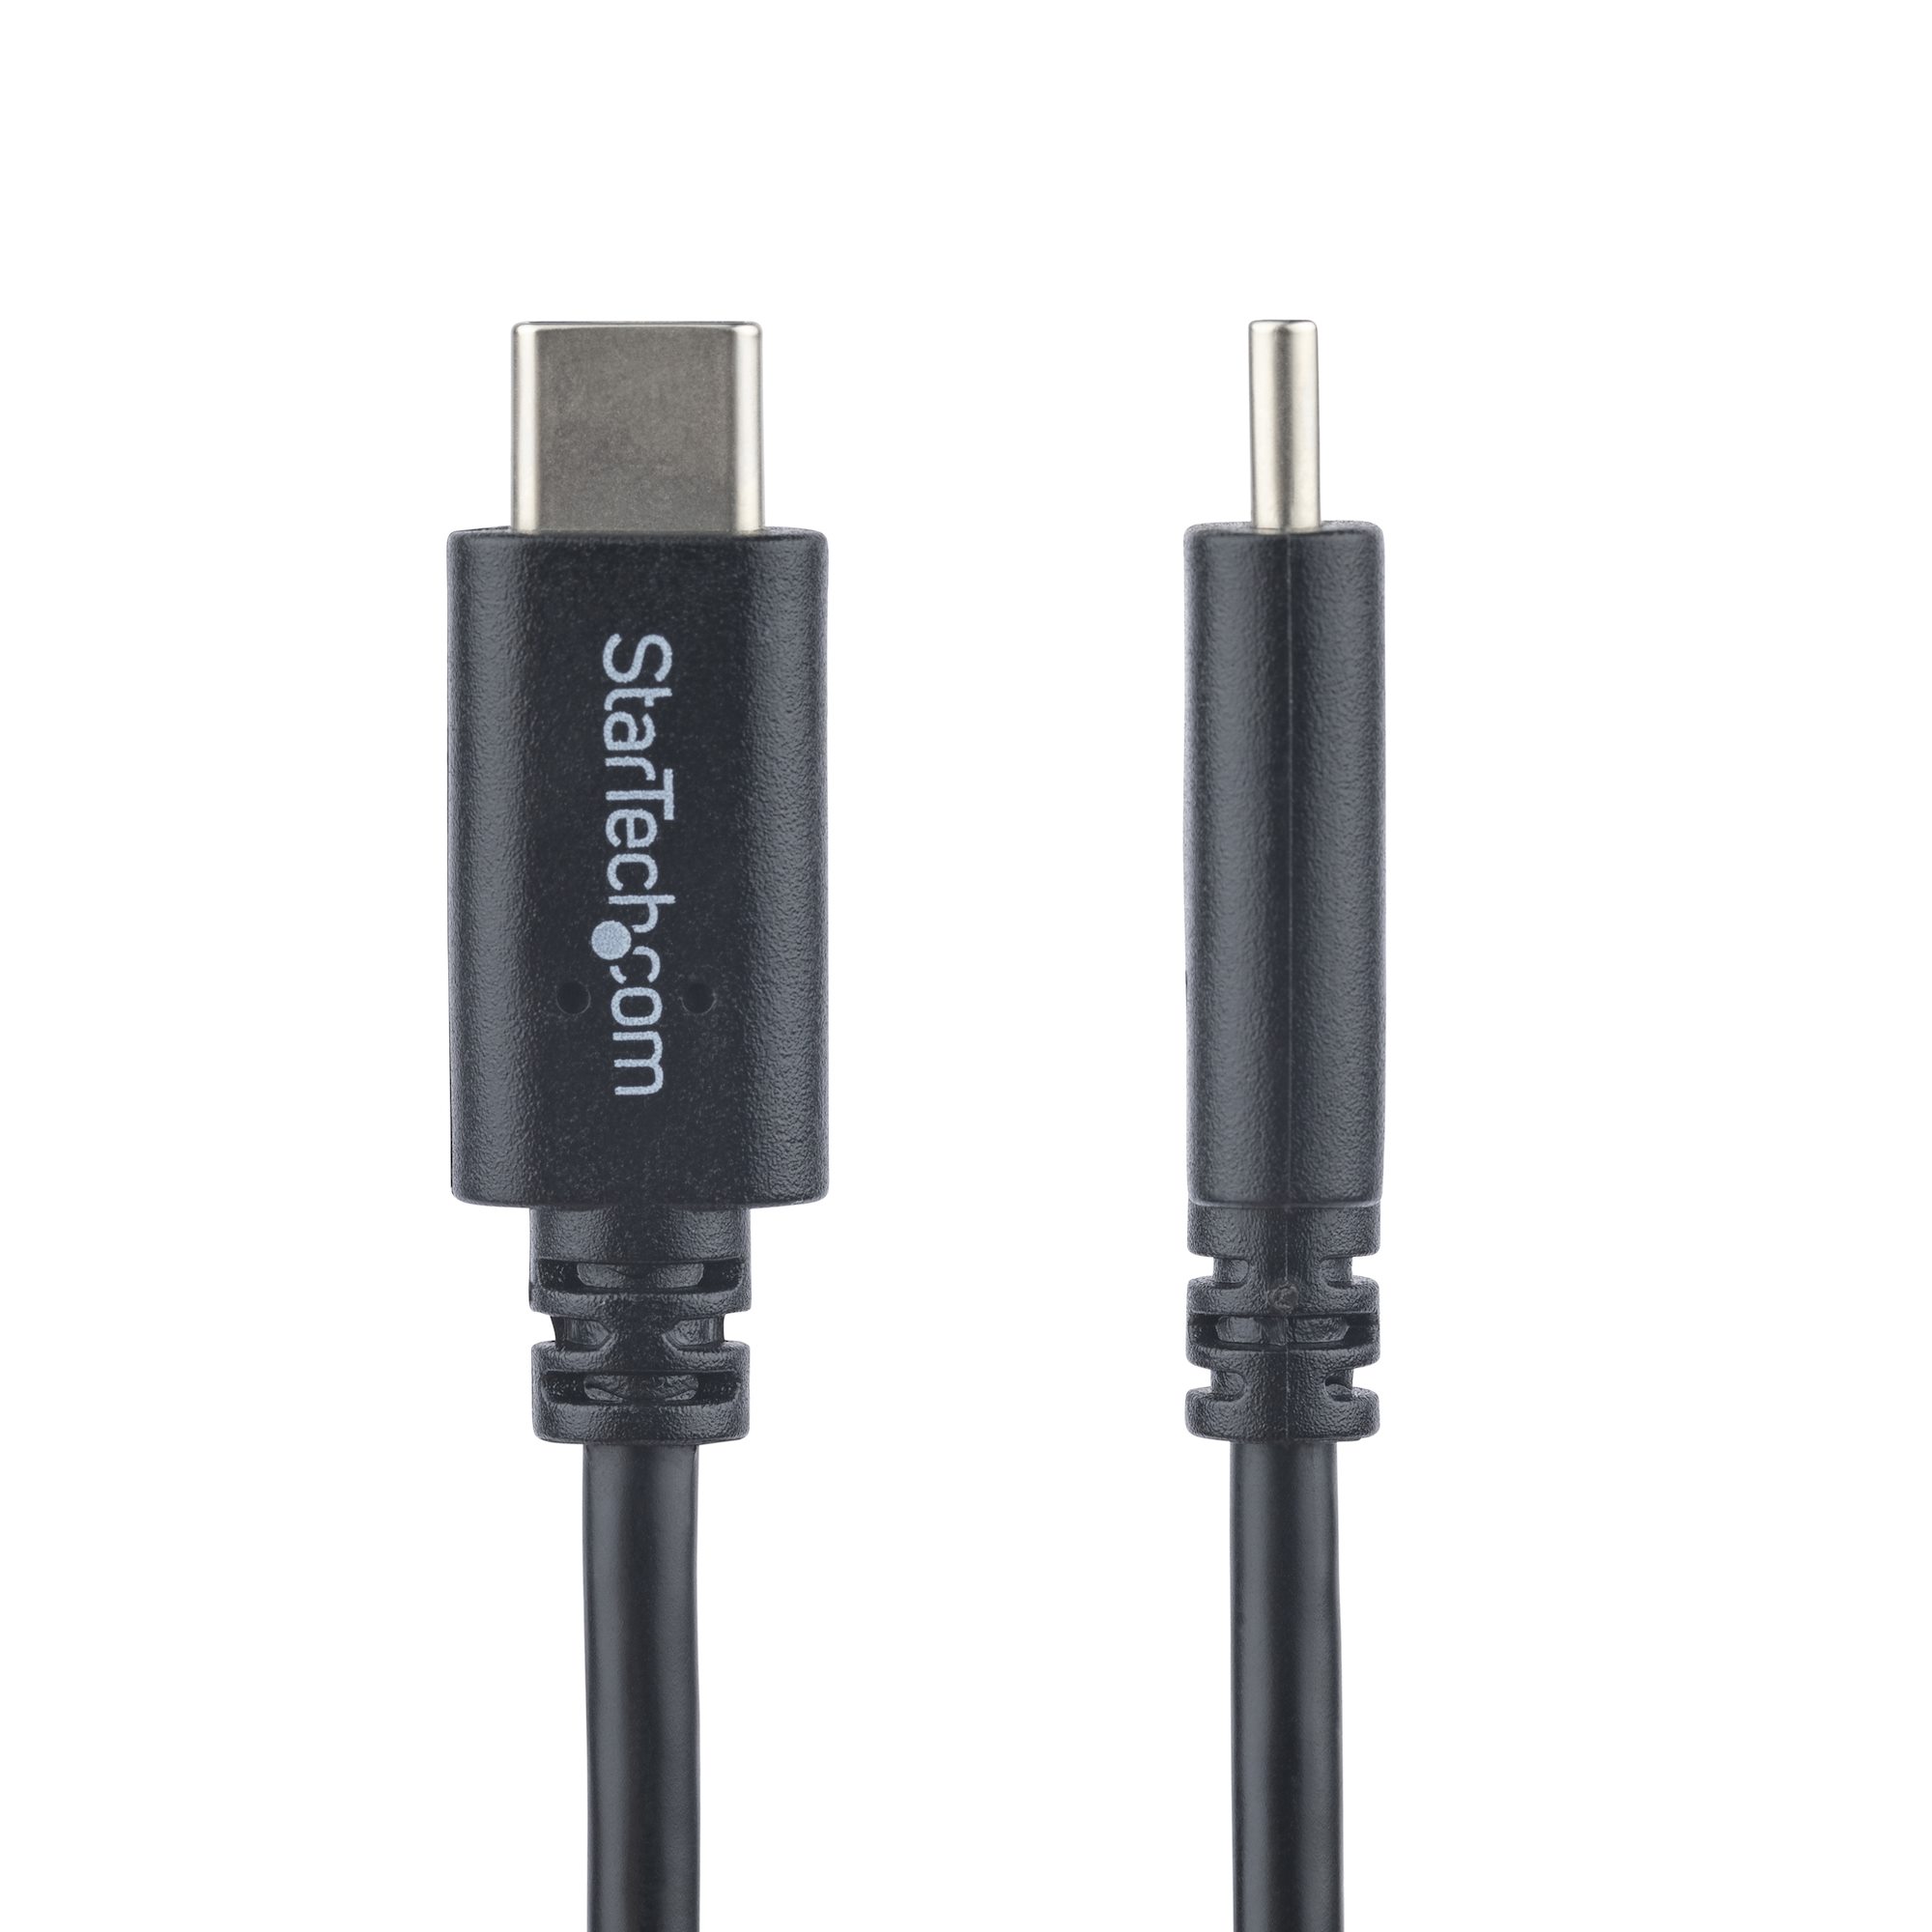 Câble USB 2.0 type A / A mâle - 2m Noir - Câbles USB - Achat & prix